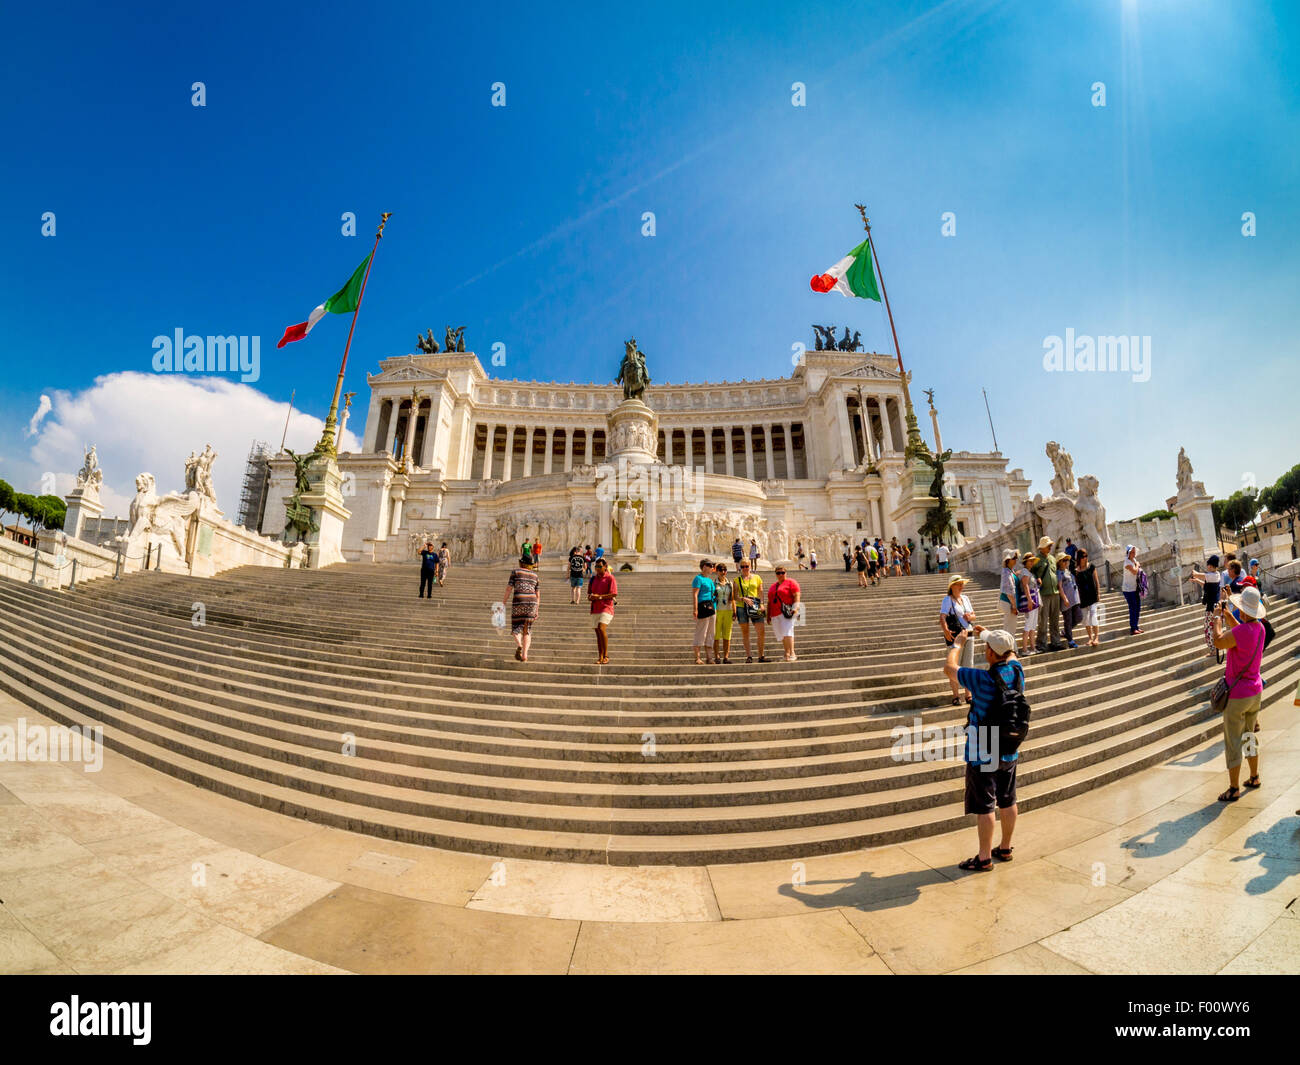 Altare della Patria or National Monument to Victor Emmanuel II. Rome, Italy. Stock Photo